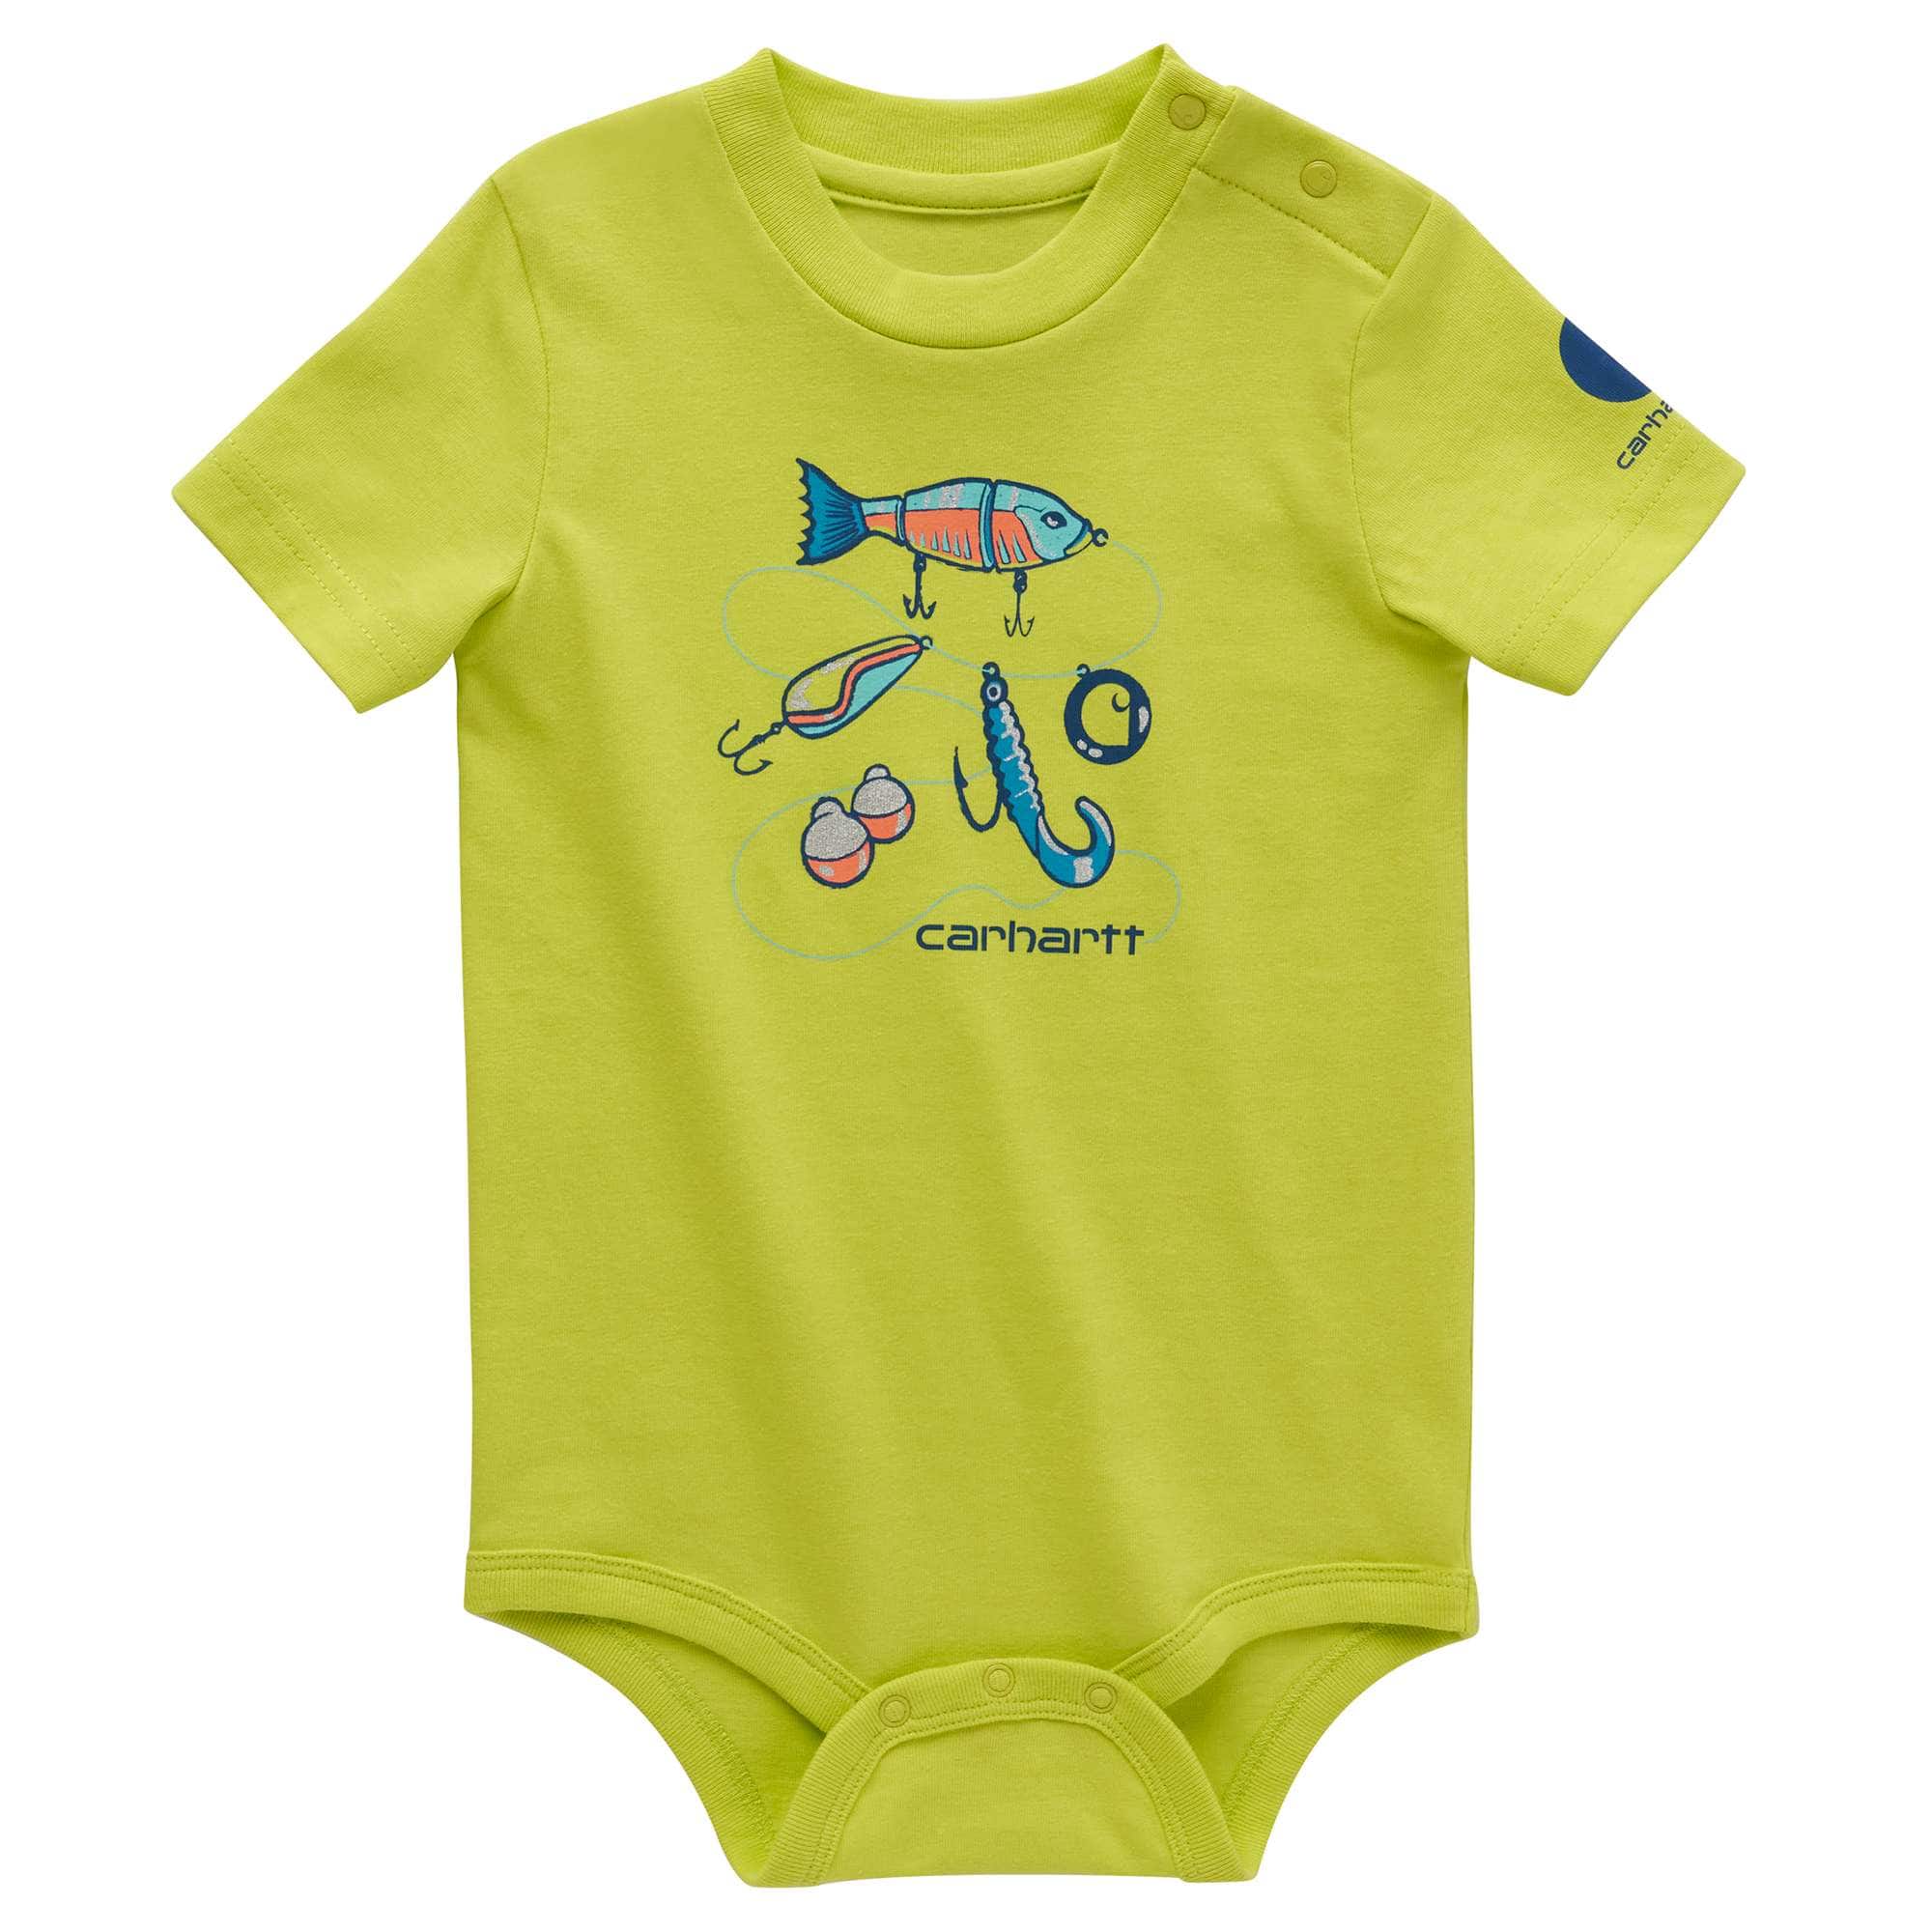 Carhartt Boy's Infant/Toddler Fishing Vest Graphic Onesie